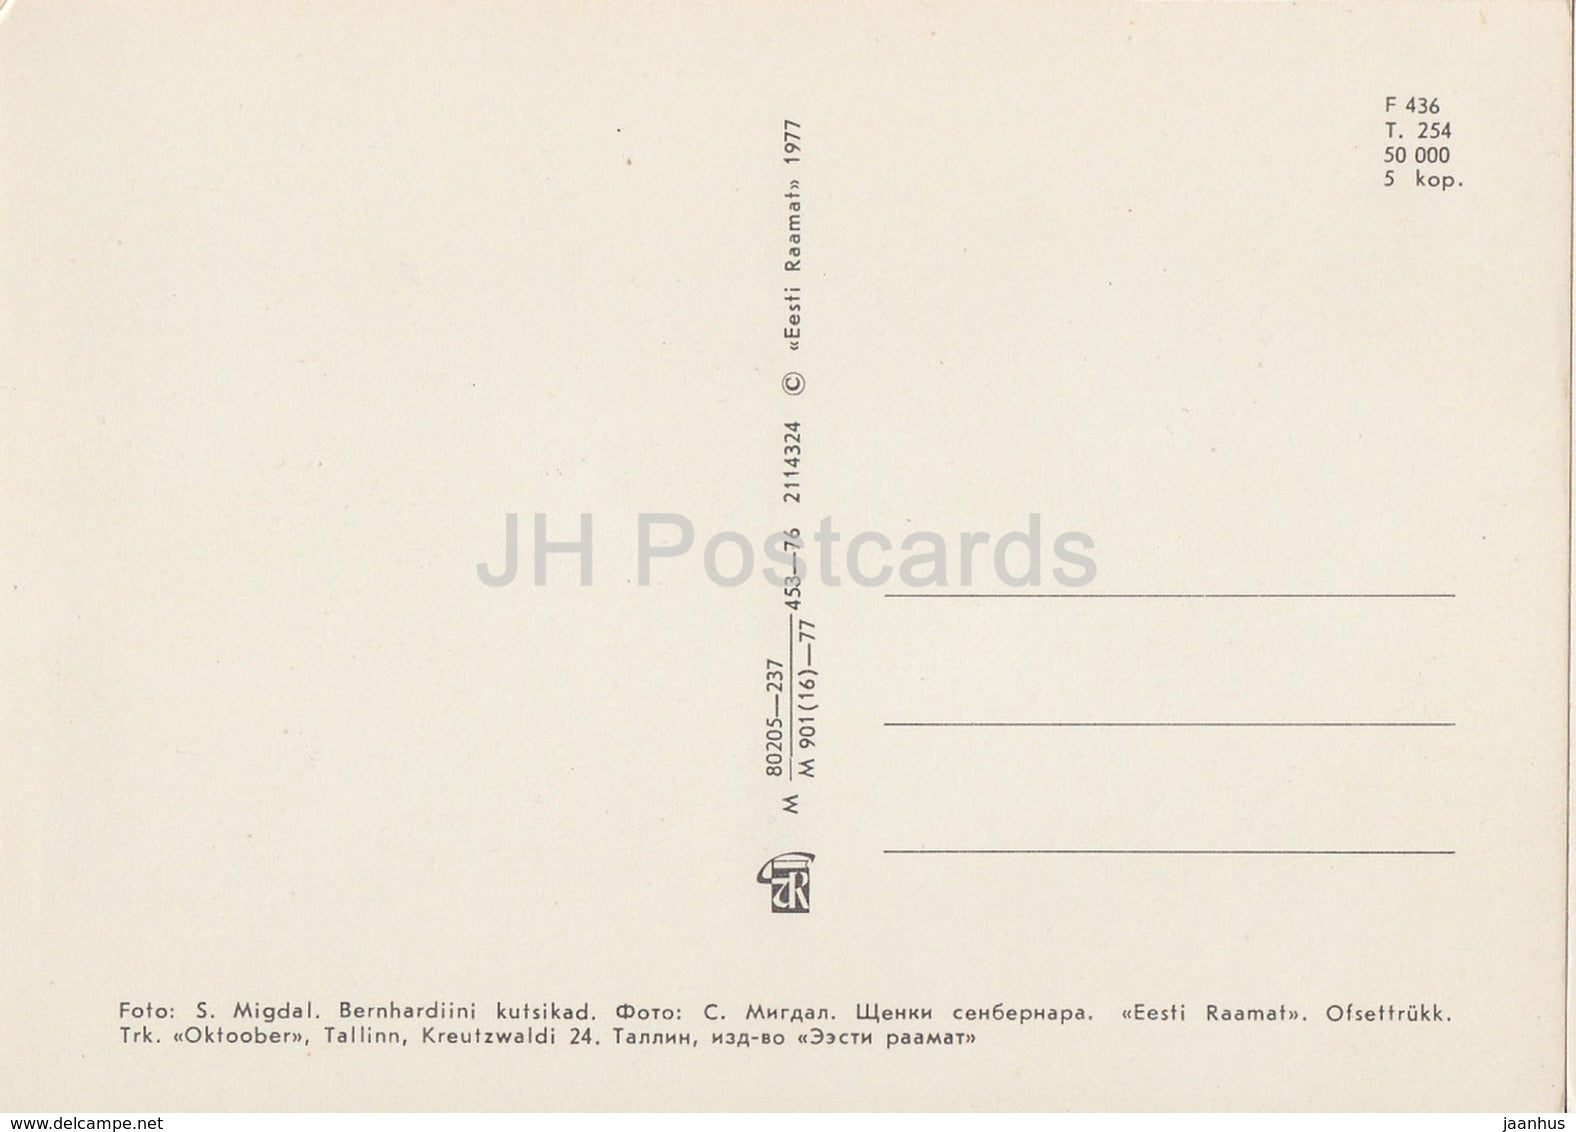 St. Bernard poppies - dogs - animals - 1977 - Estonia USSR - unused - JH Postcards